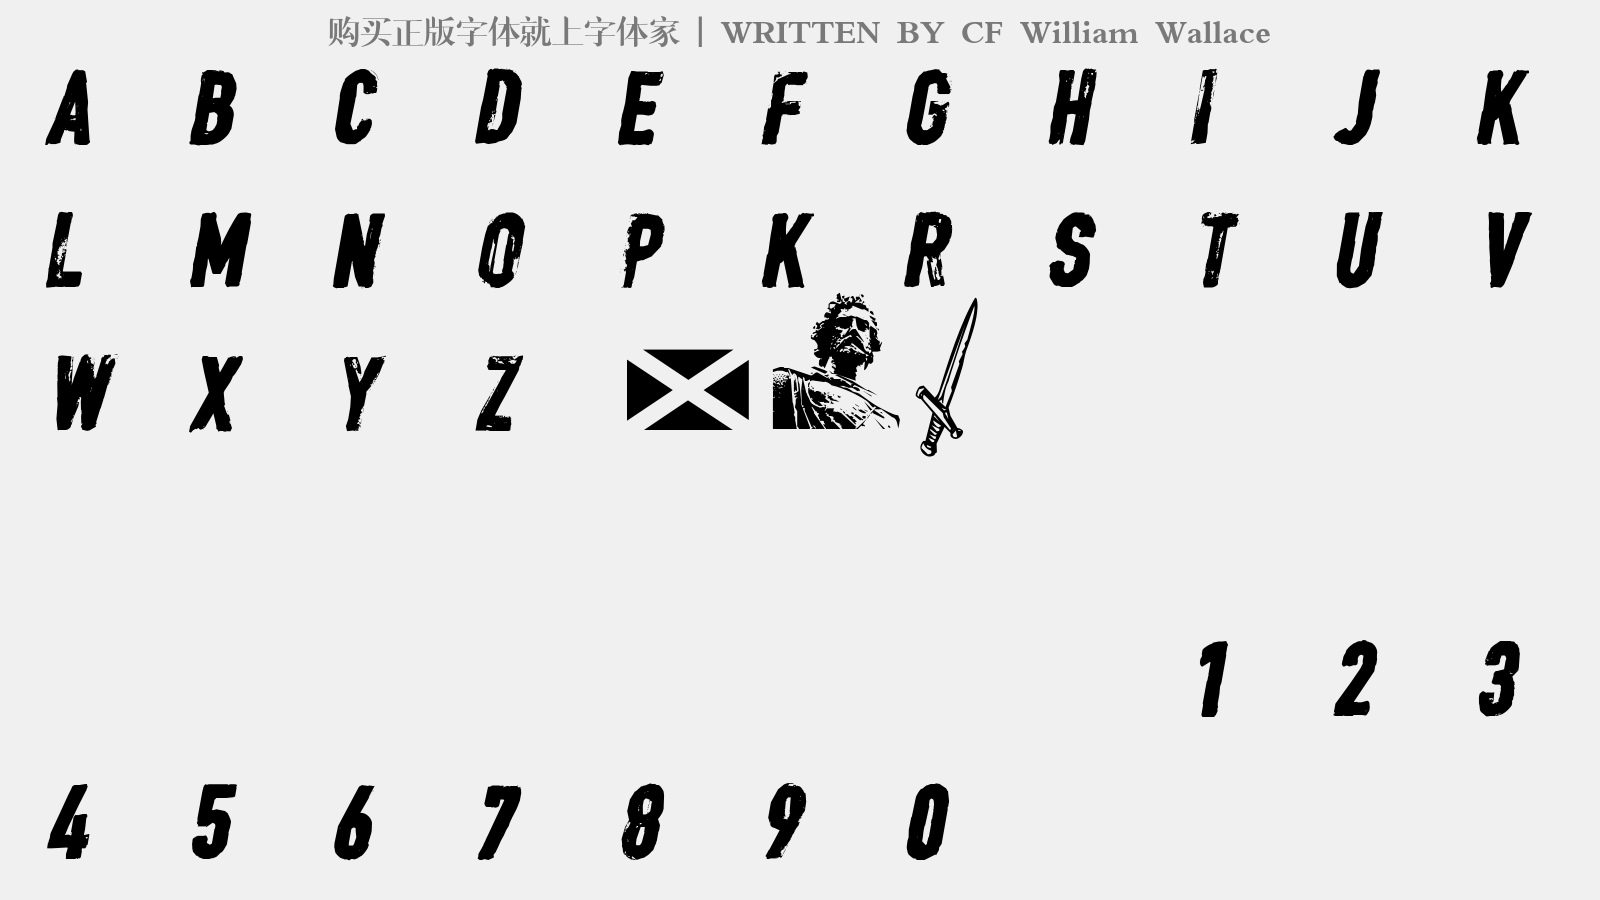 CF William Wallace - 大写字母/小写字母/数字